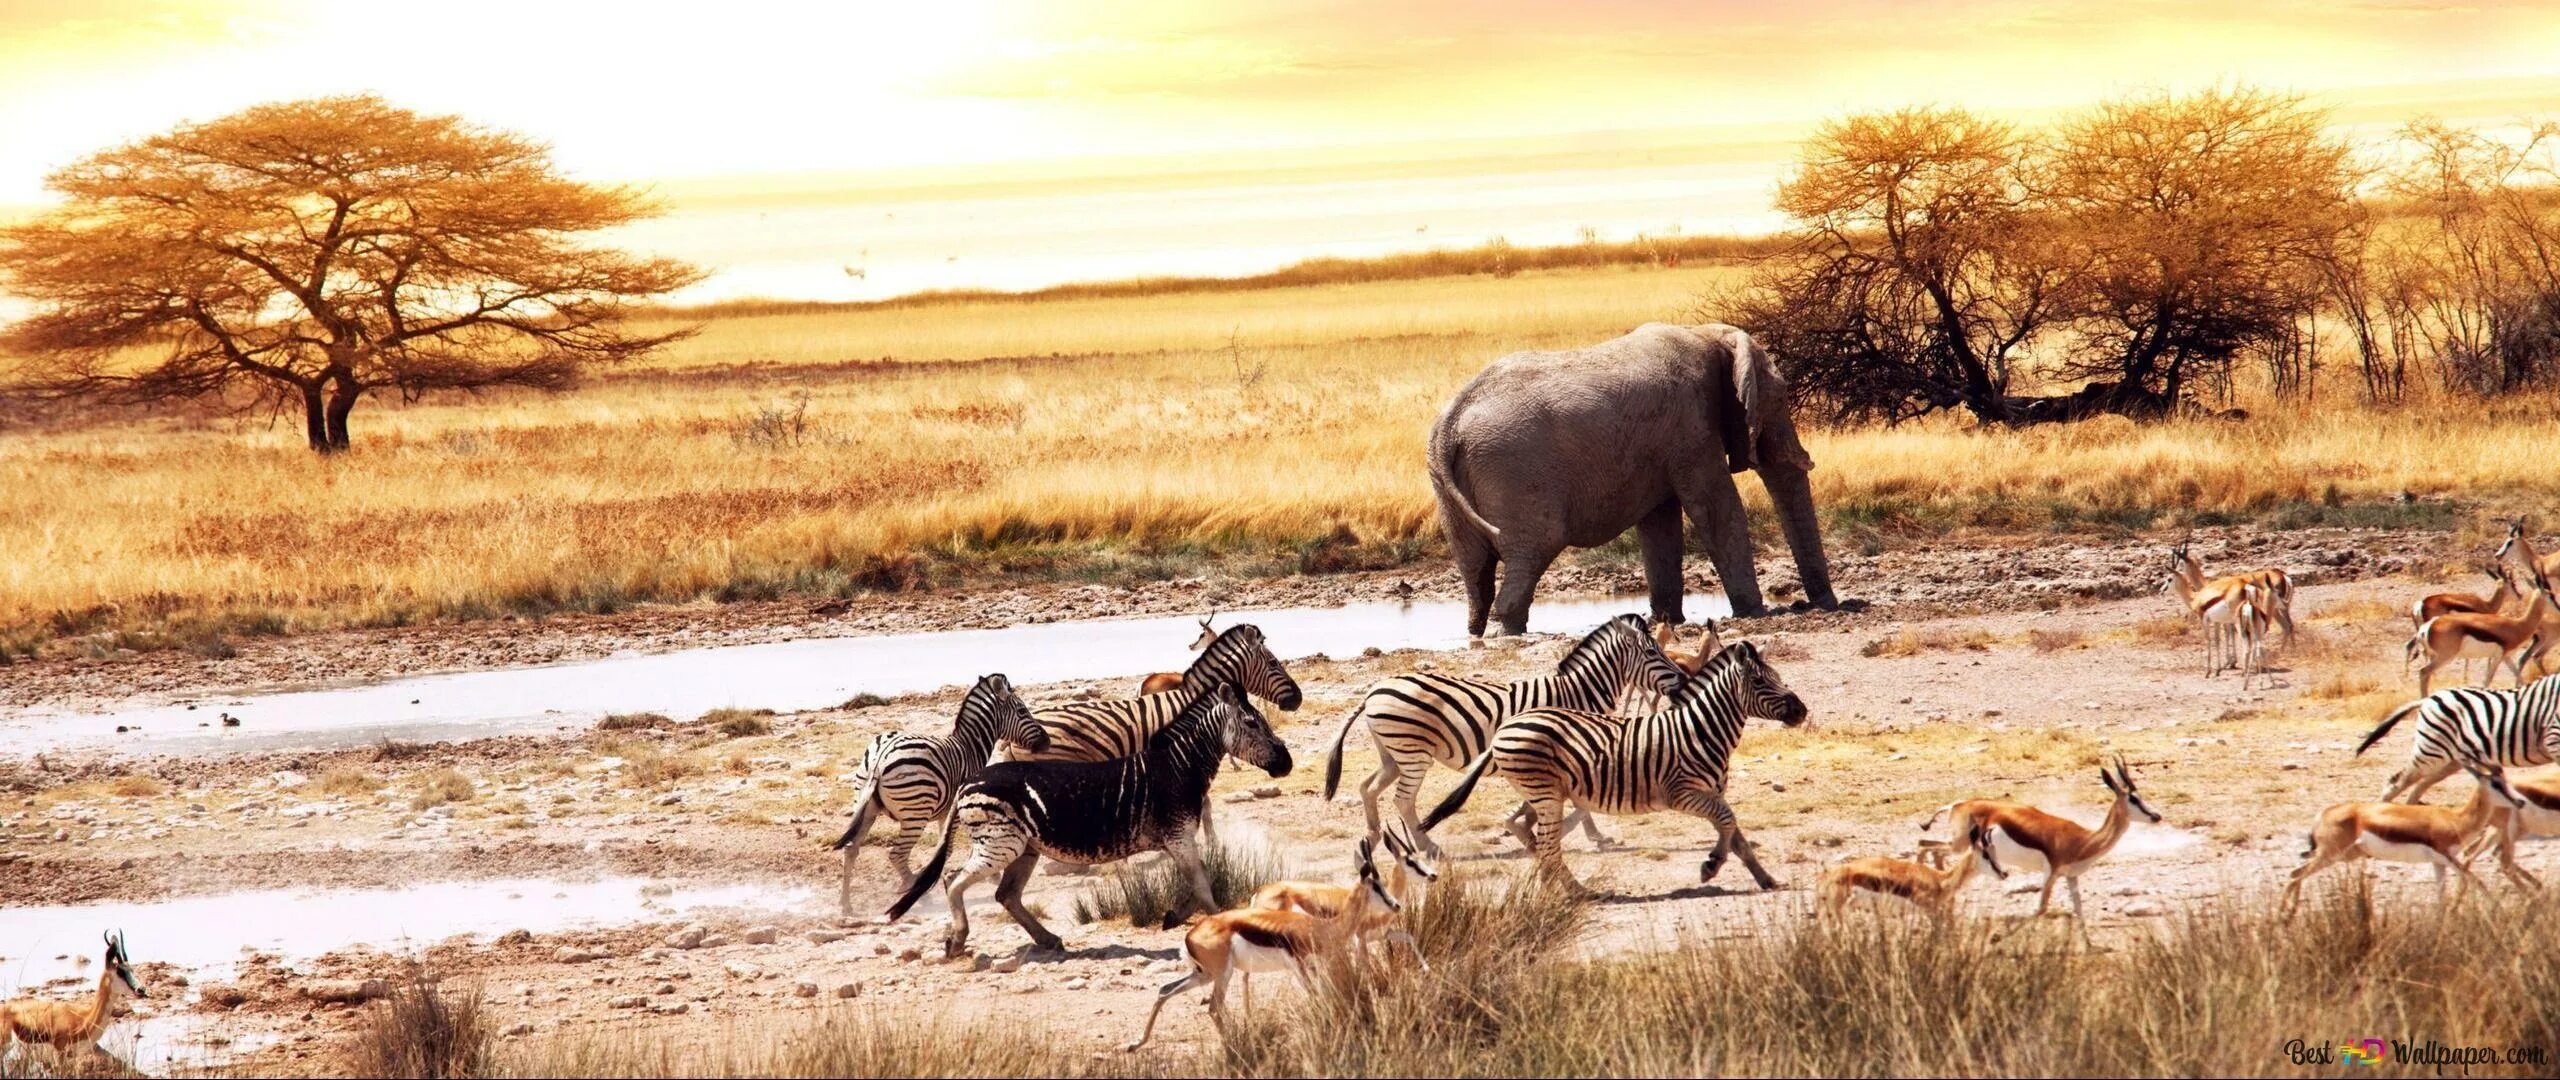 Африка панорама. Зебры в саванне. Животные саванны Южной Америки. Панорама Африки для детей.